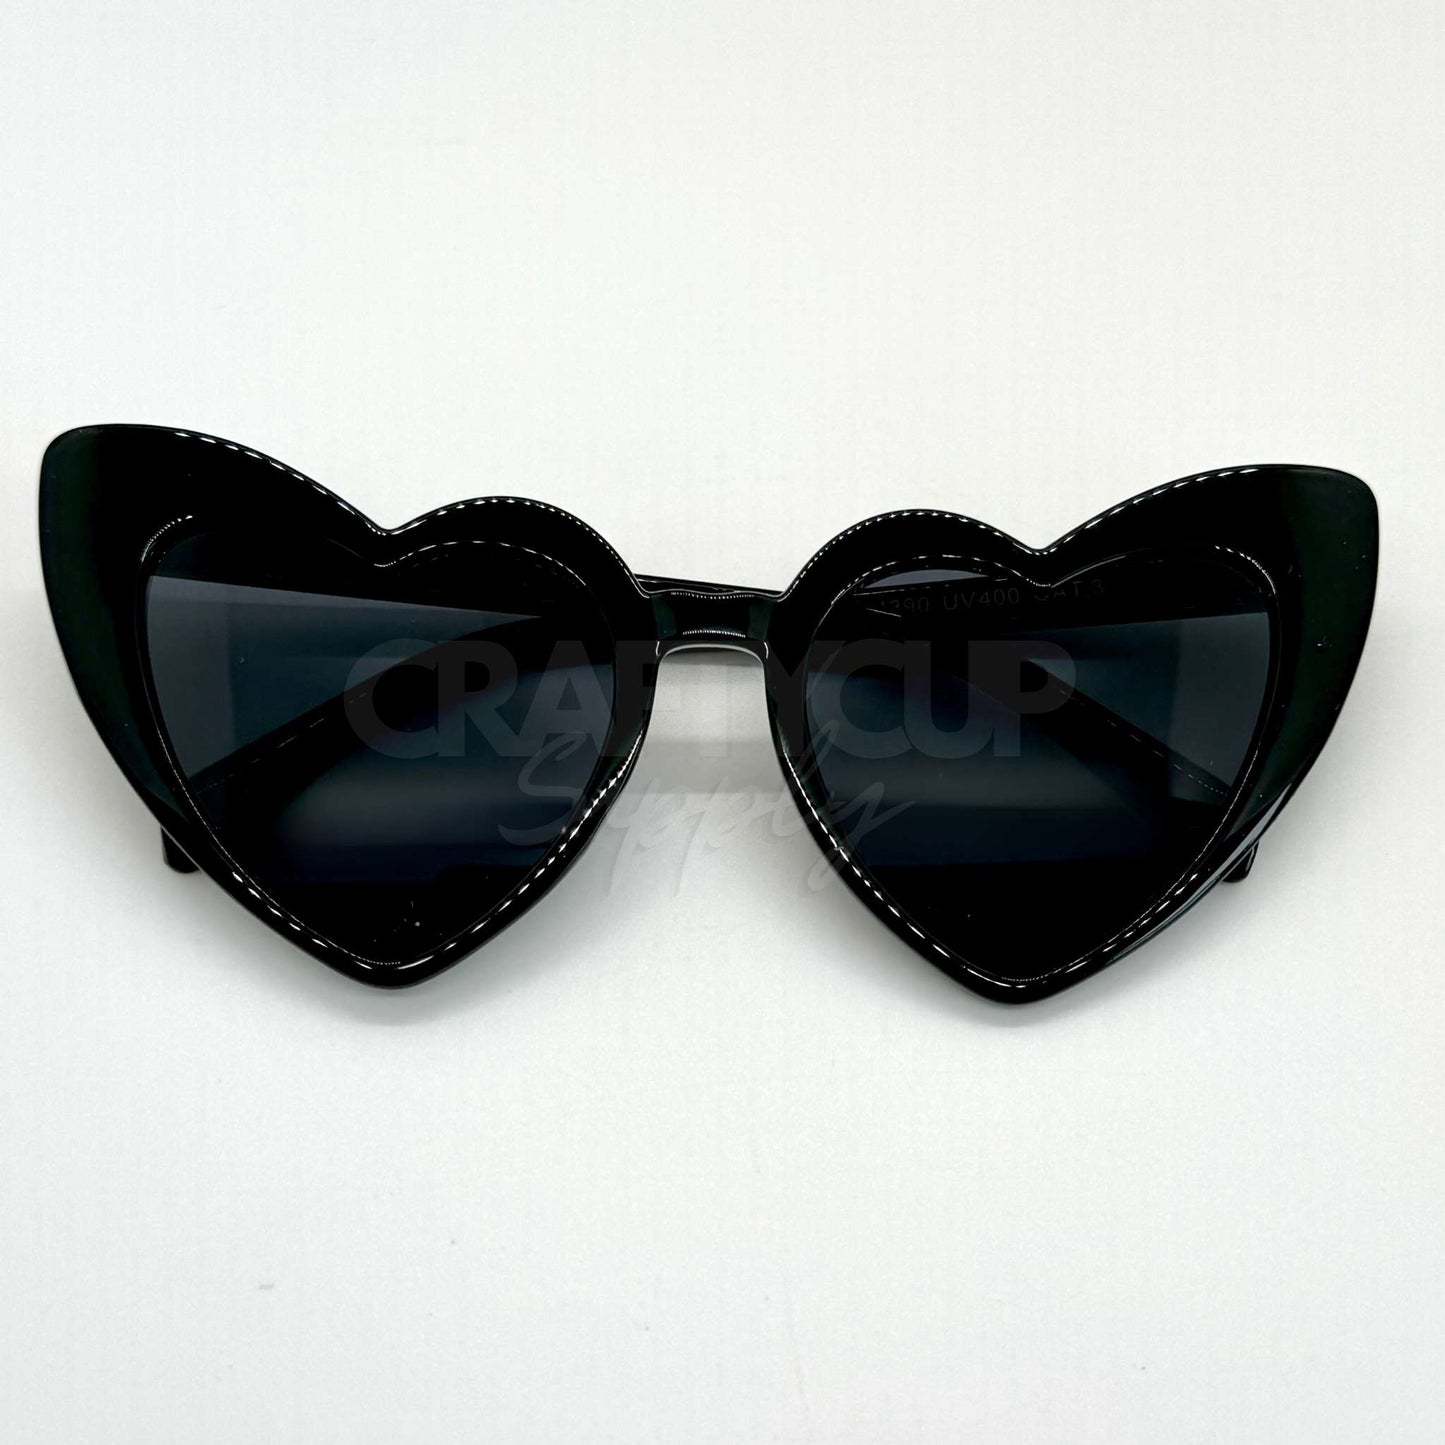 black heart shaped plastic glasses